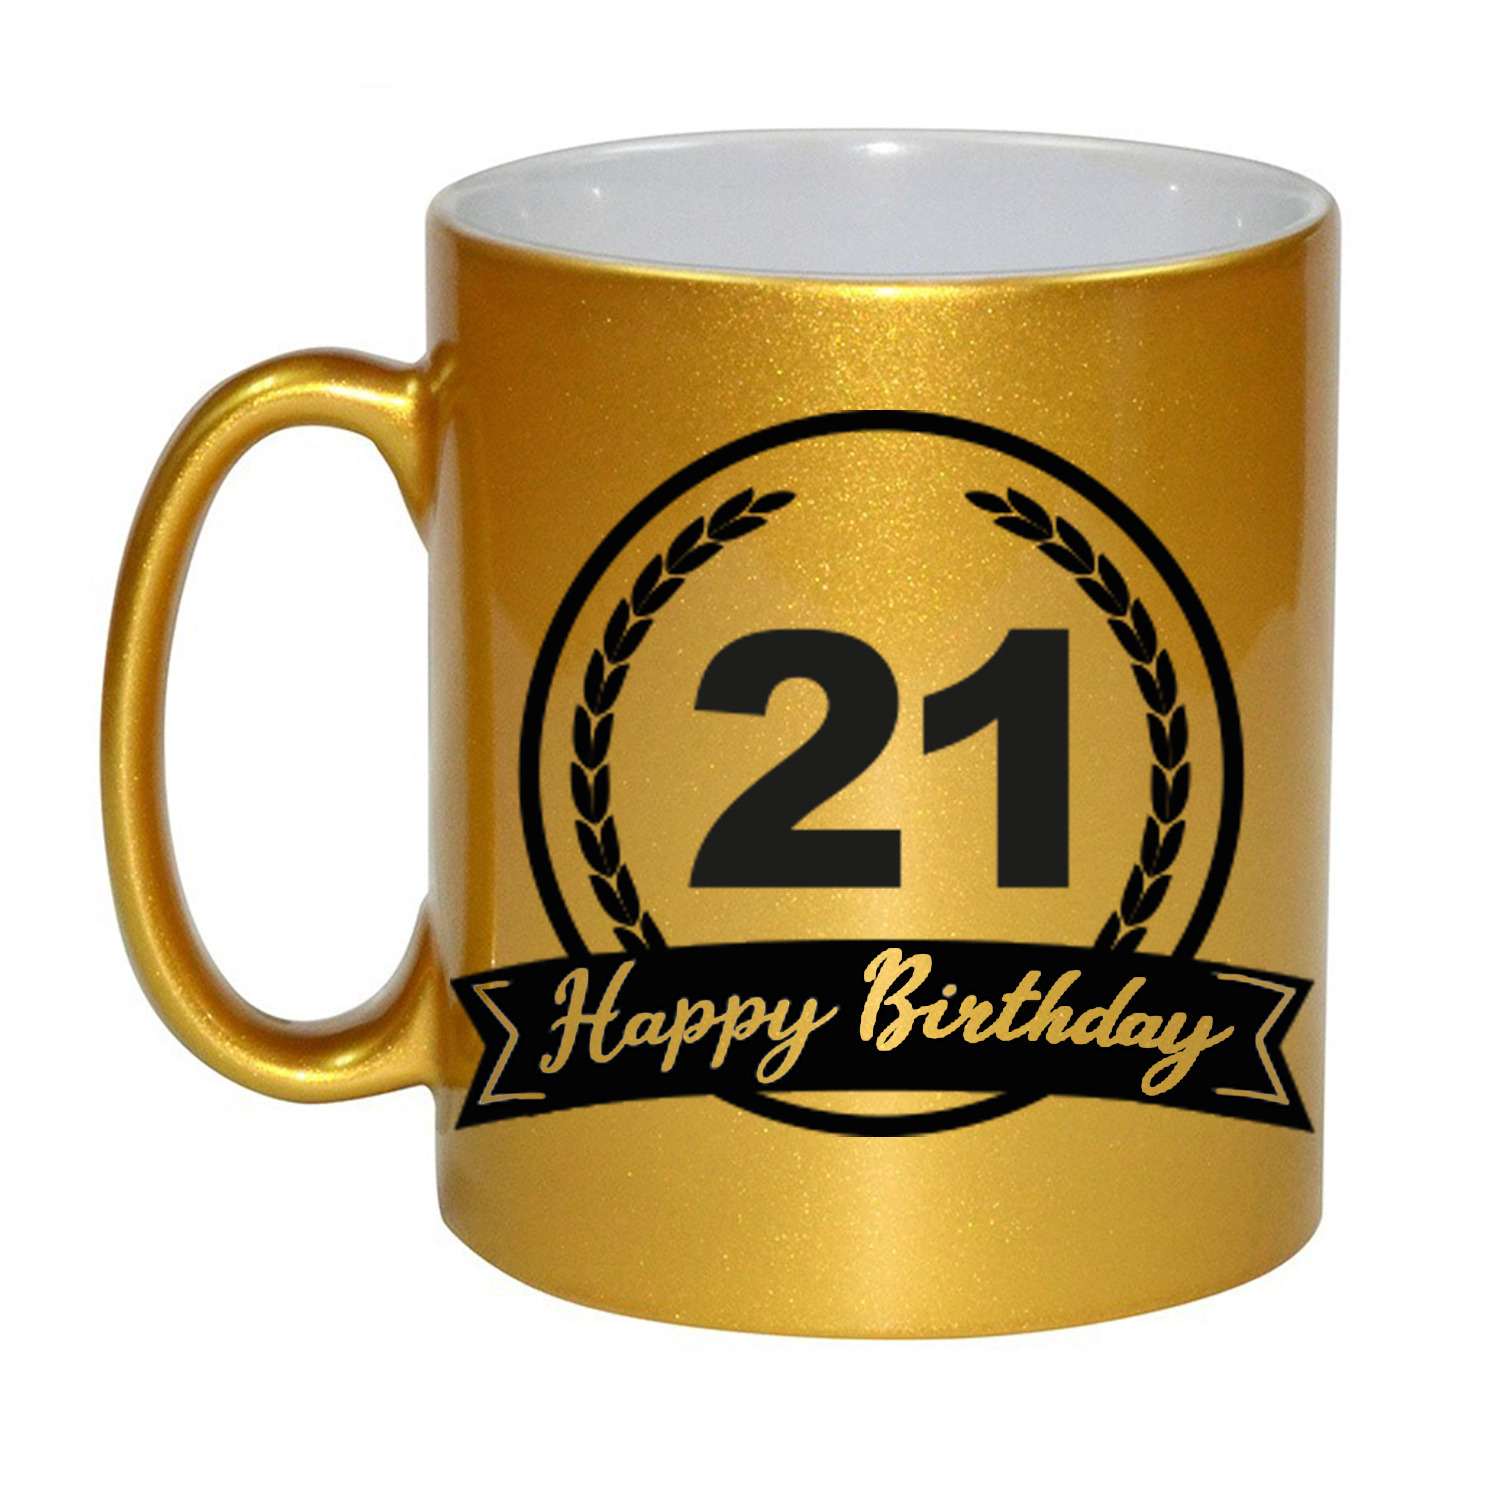 Happy Birthday 21 years gouden cadeau mok-beker met wimpel 330 ml